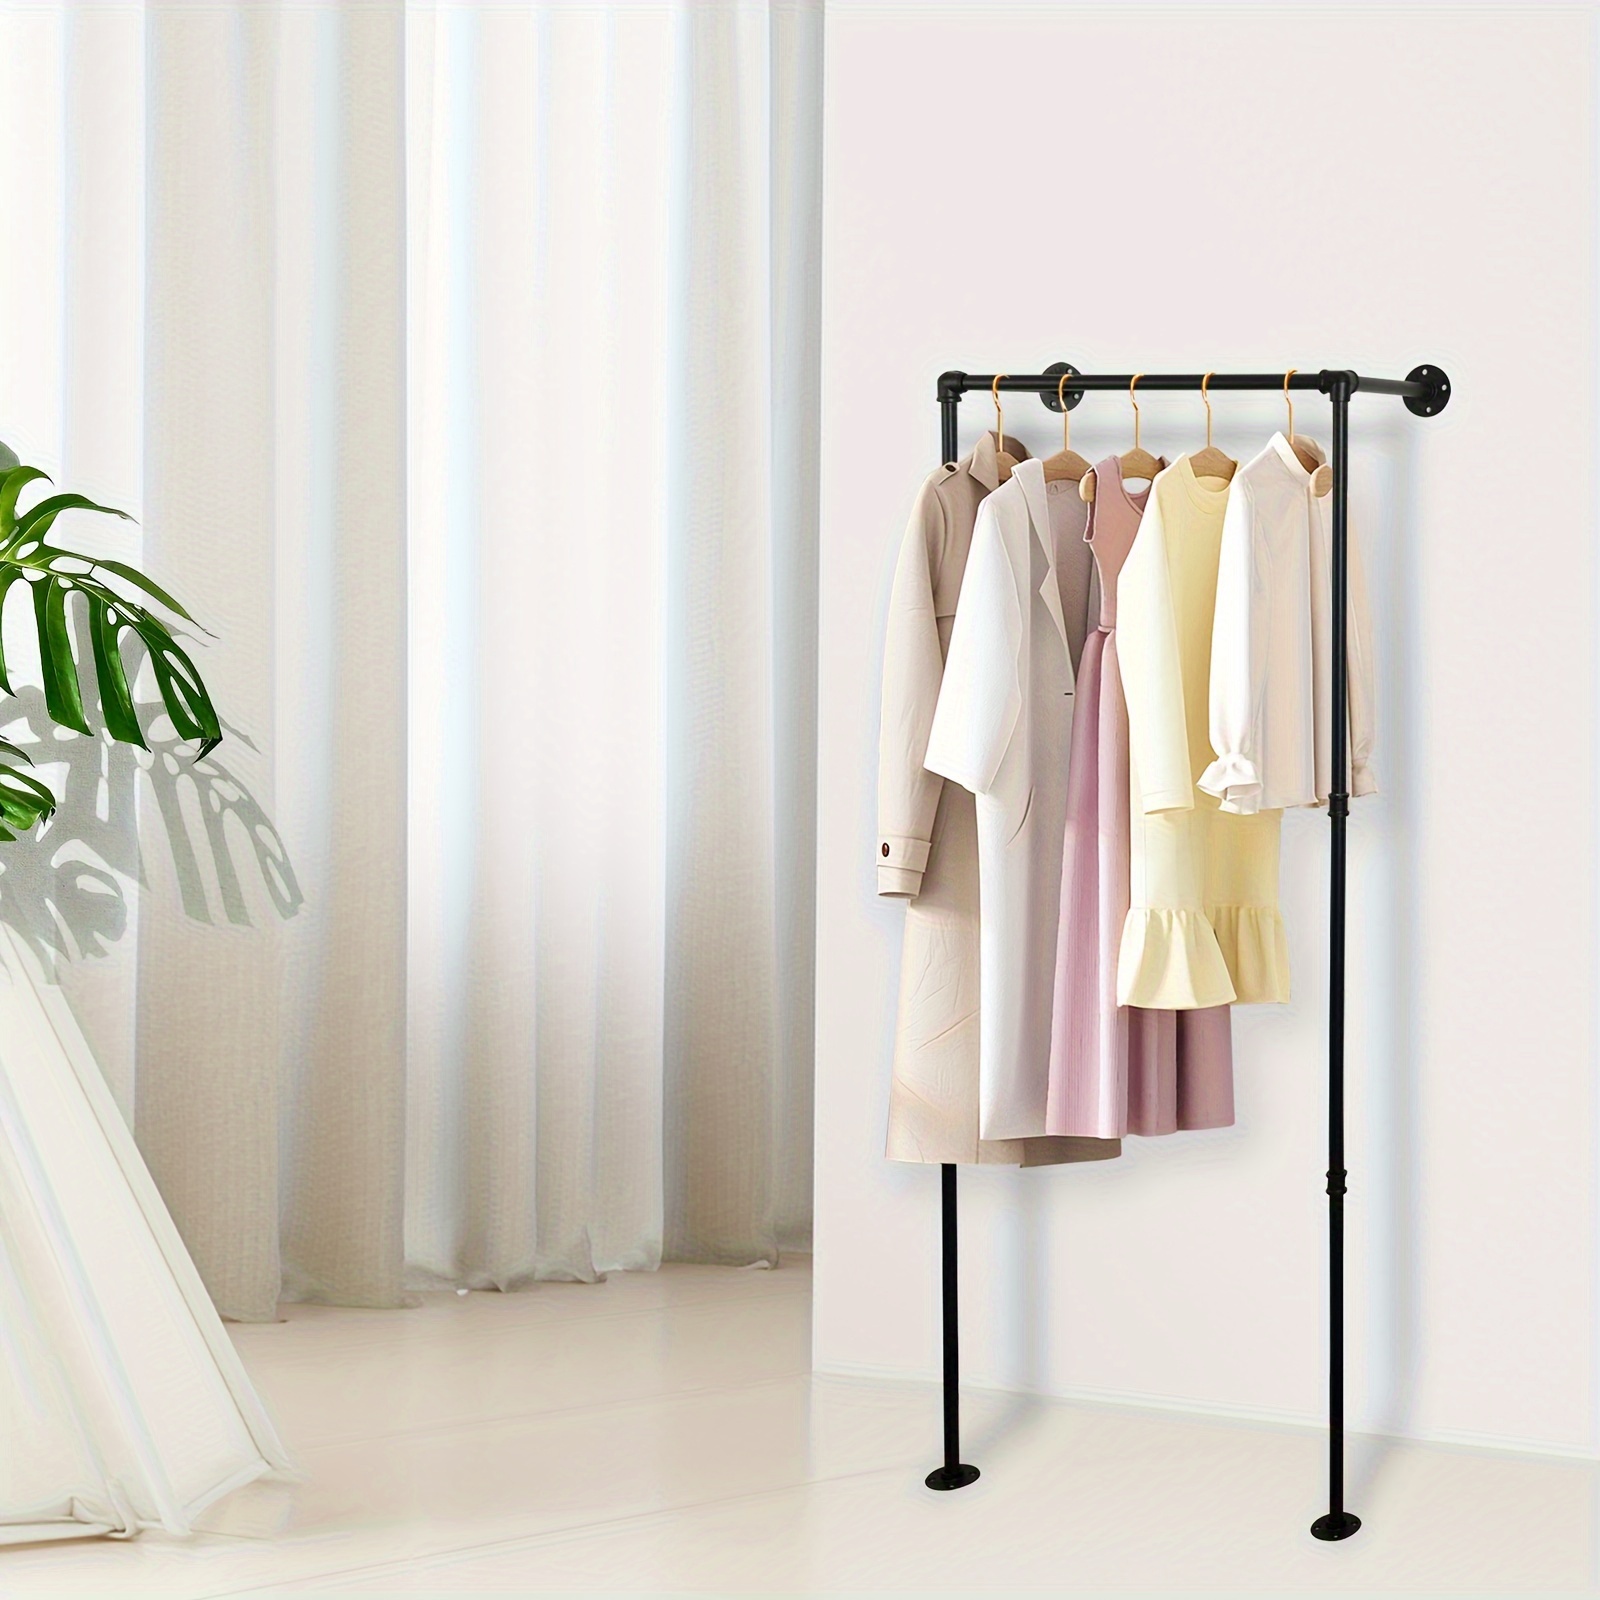 Metal Garment Rack Home Storage Rack Hanging Clothing Bar with